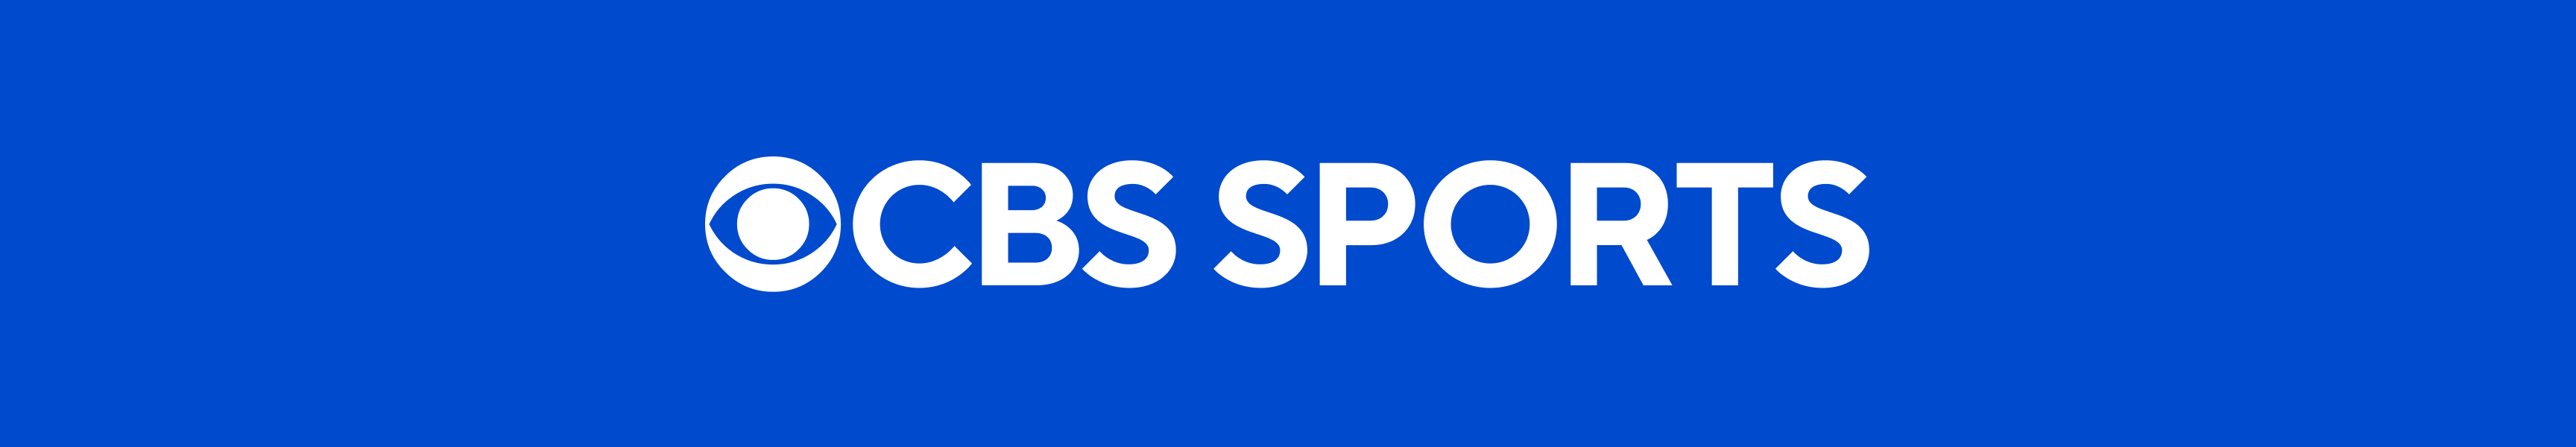 CBS Sports Hoodies y sudaderas